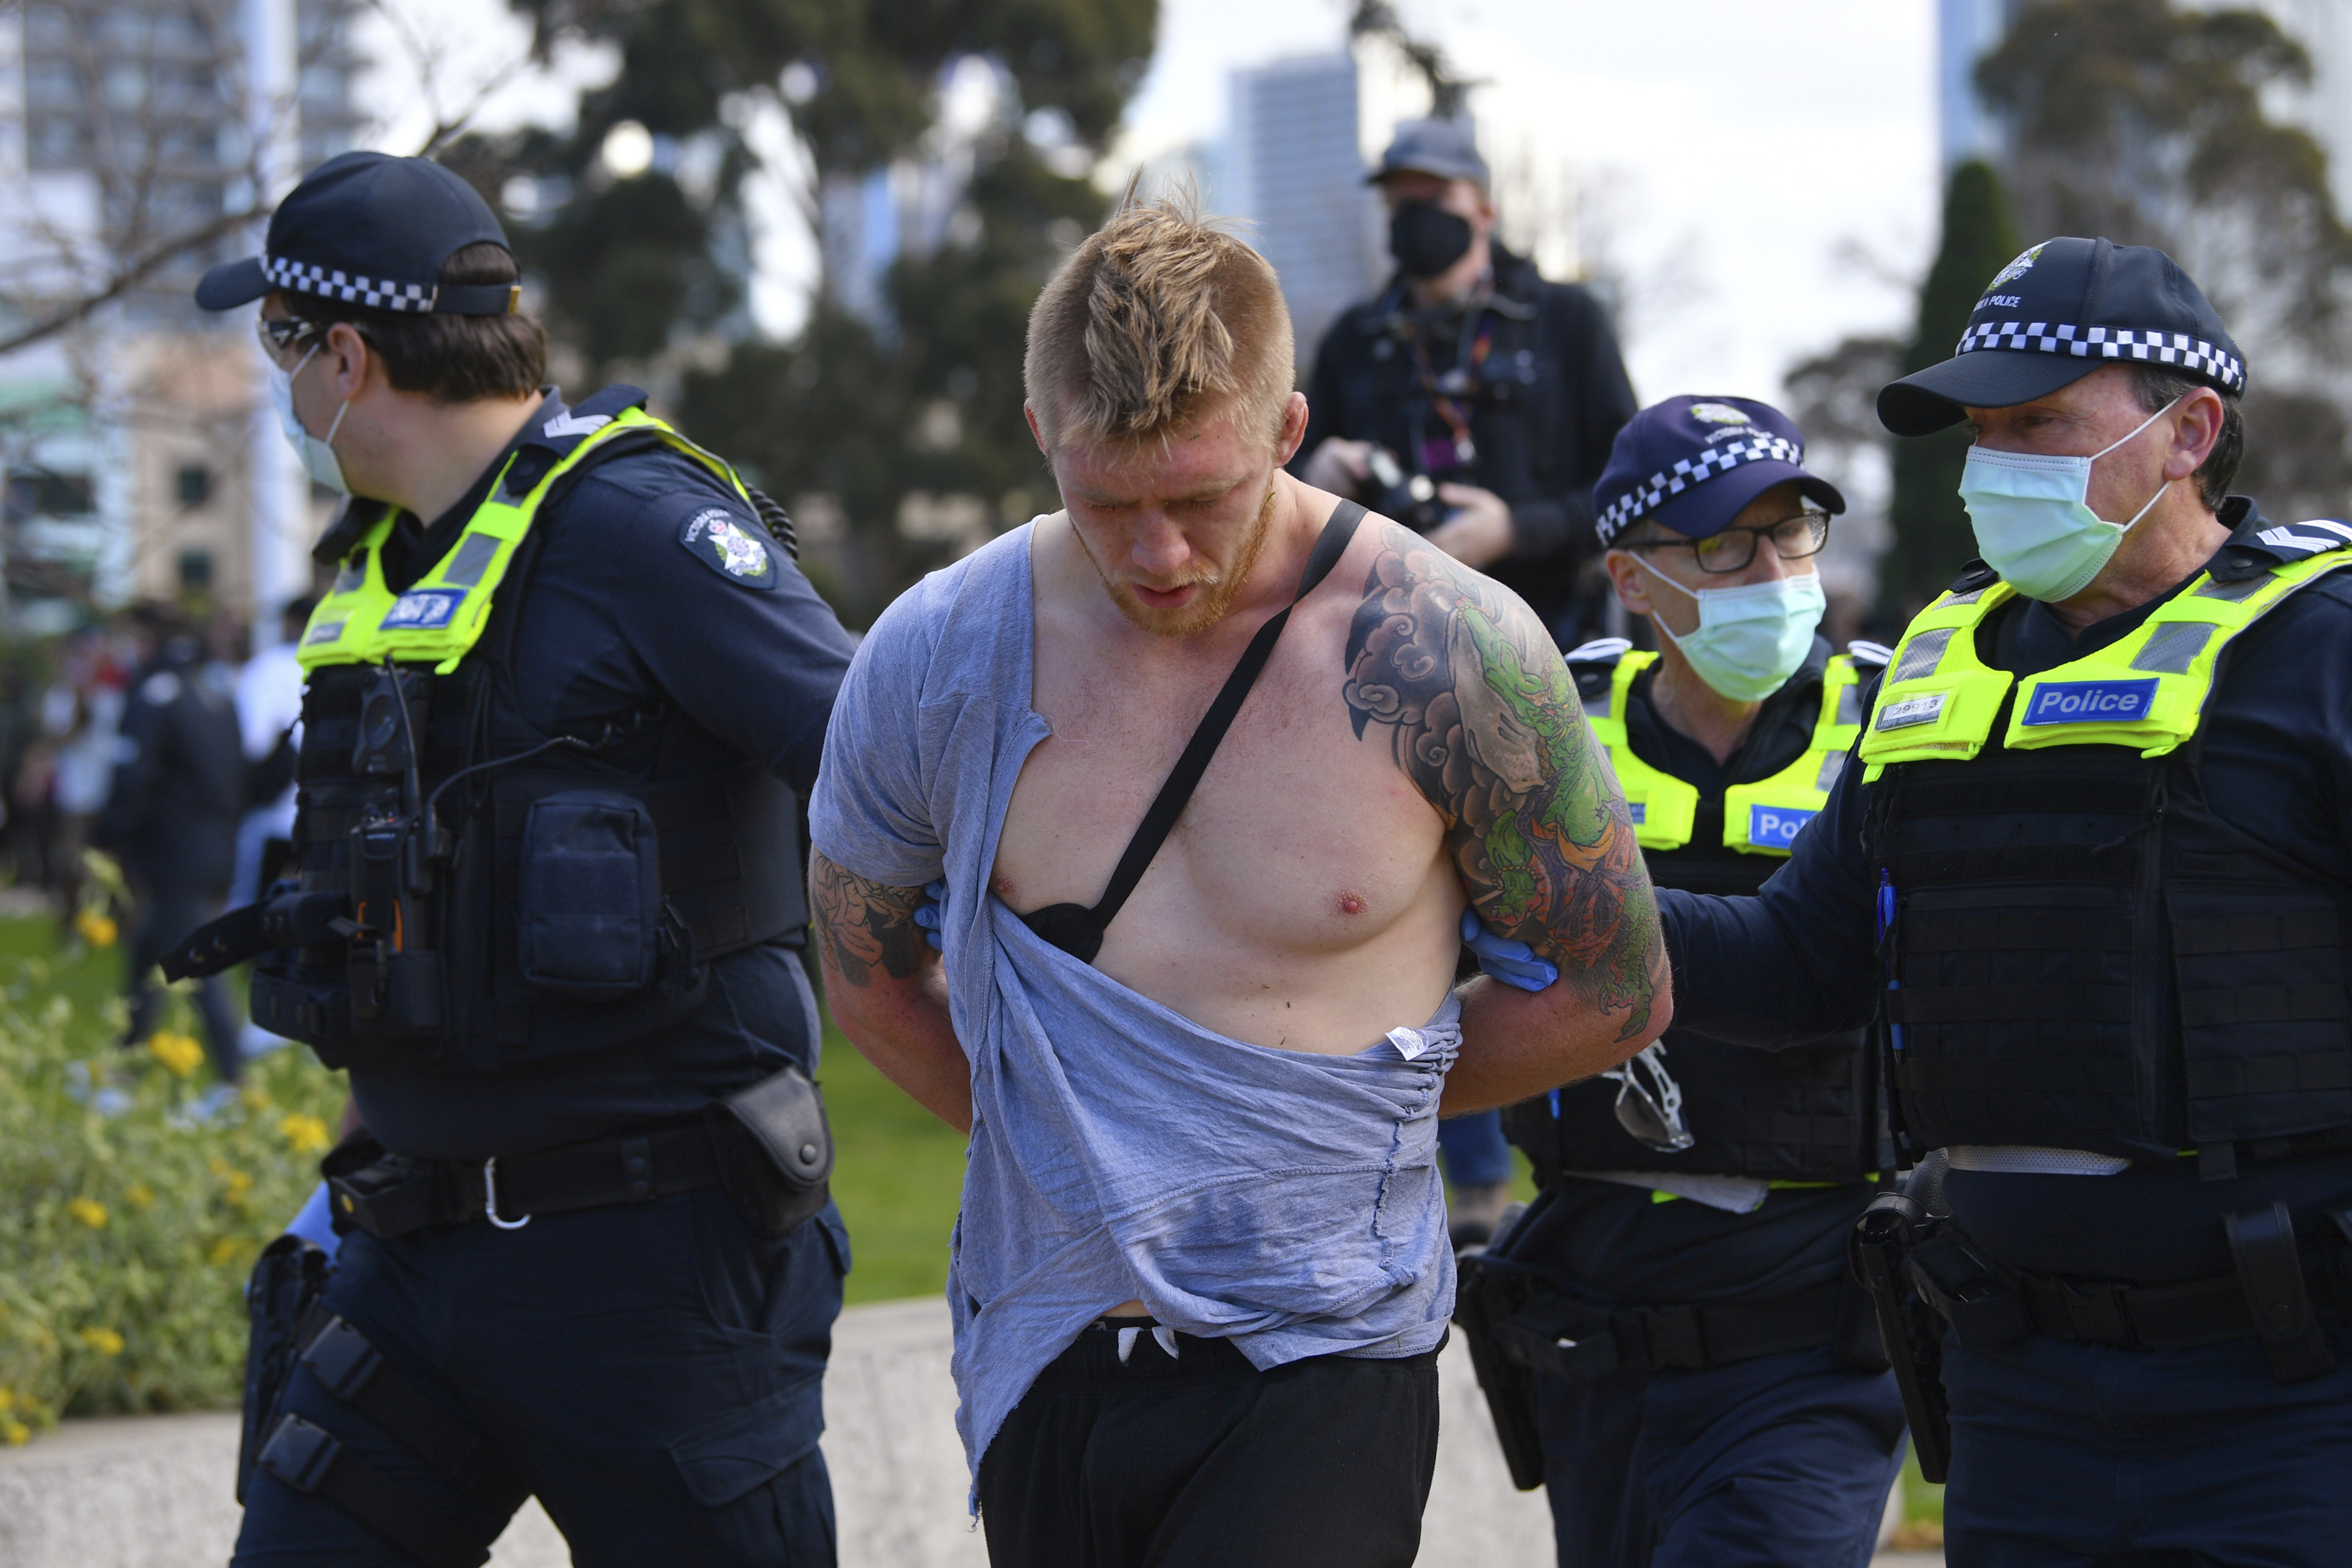 australian lockdown protest